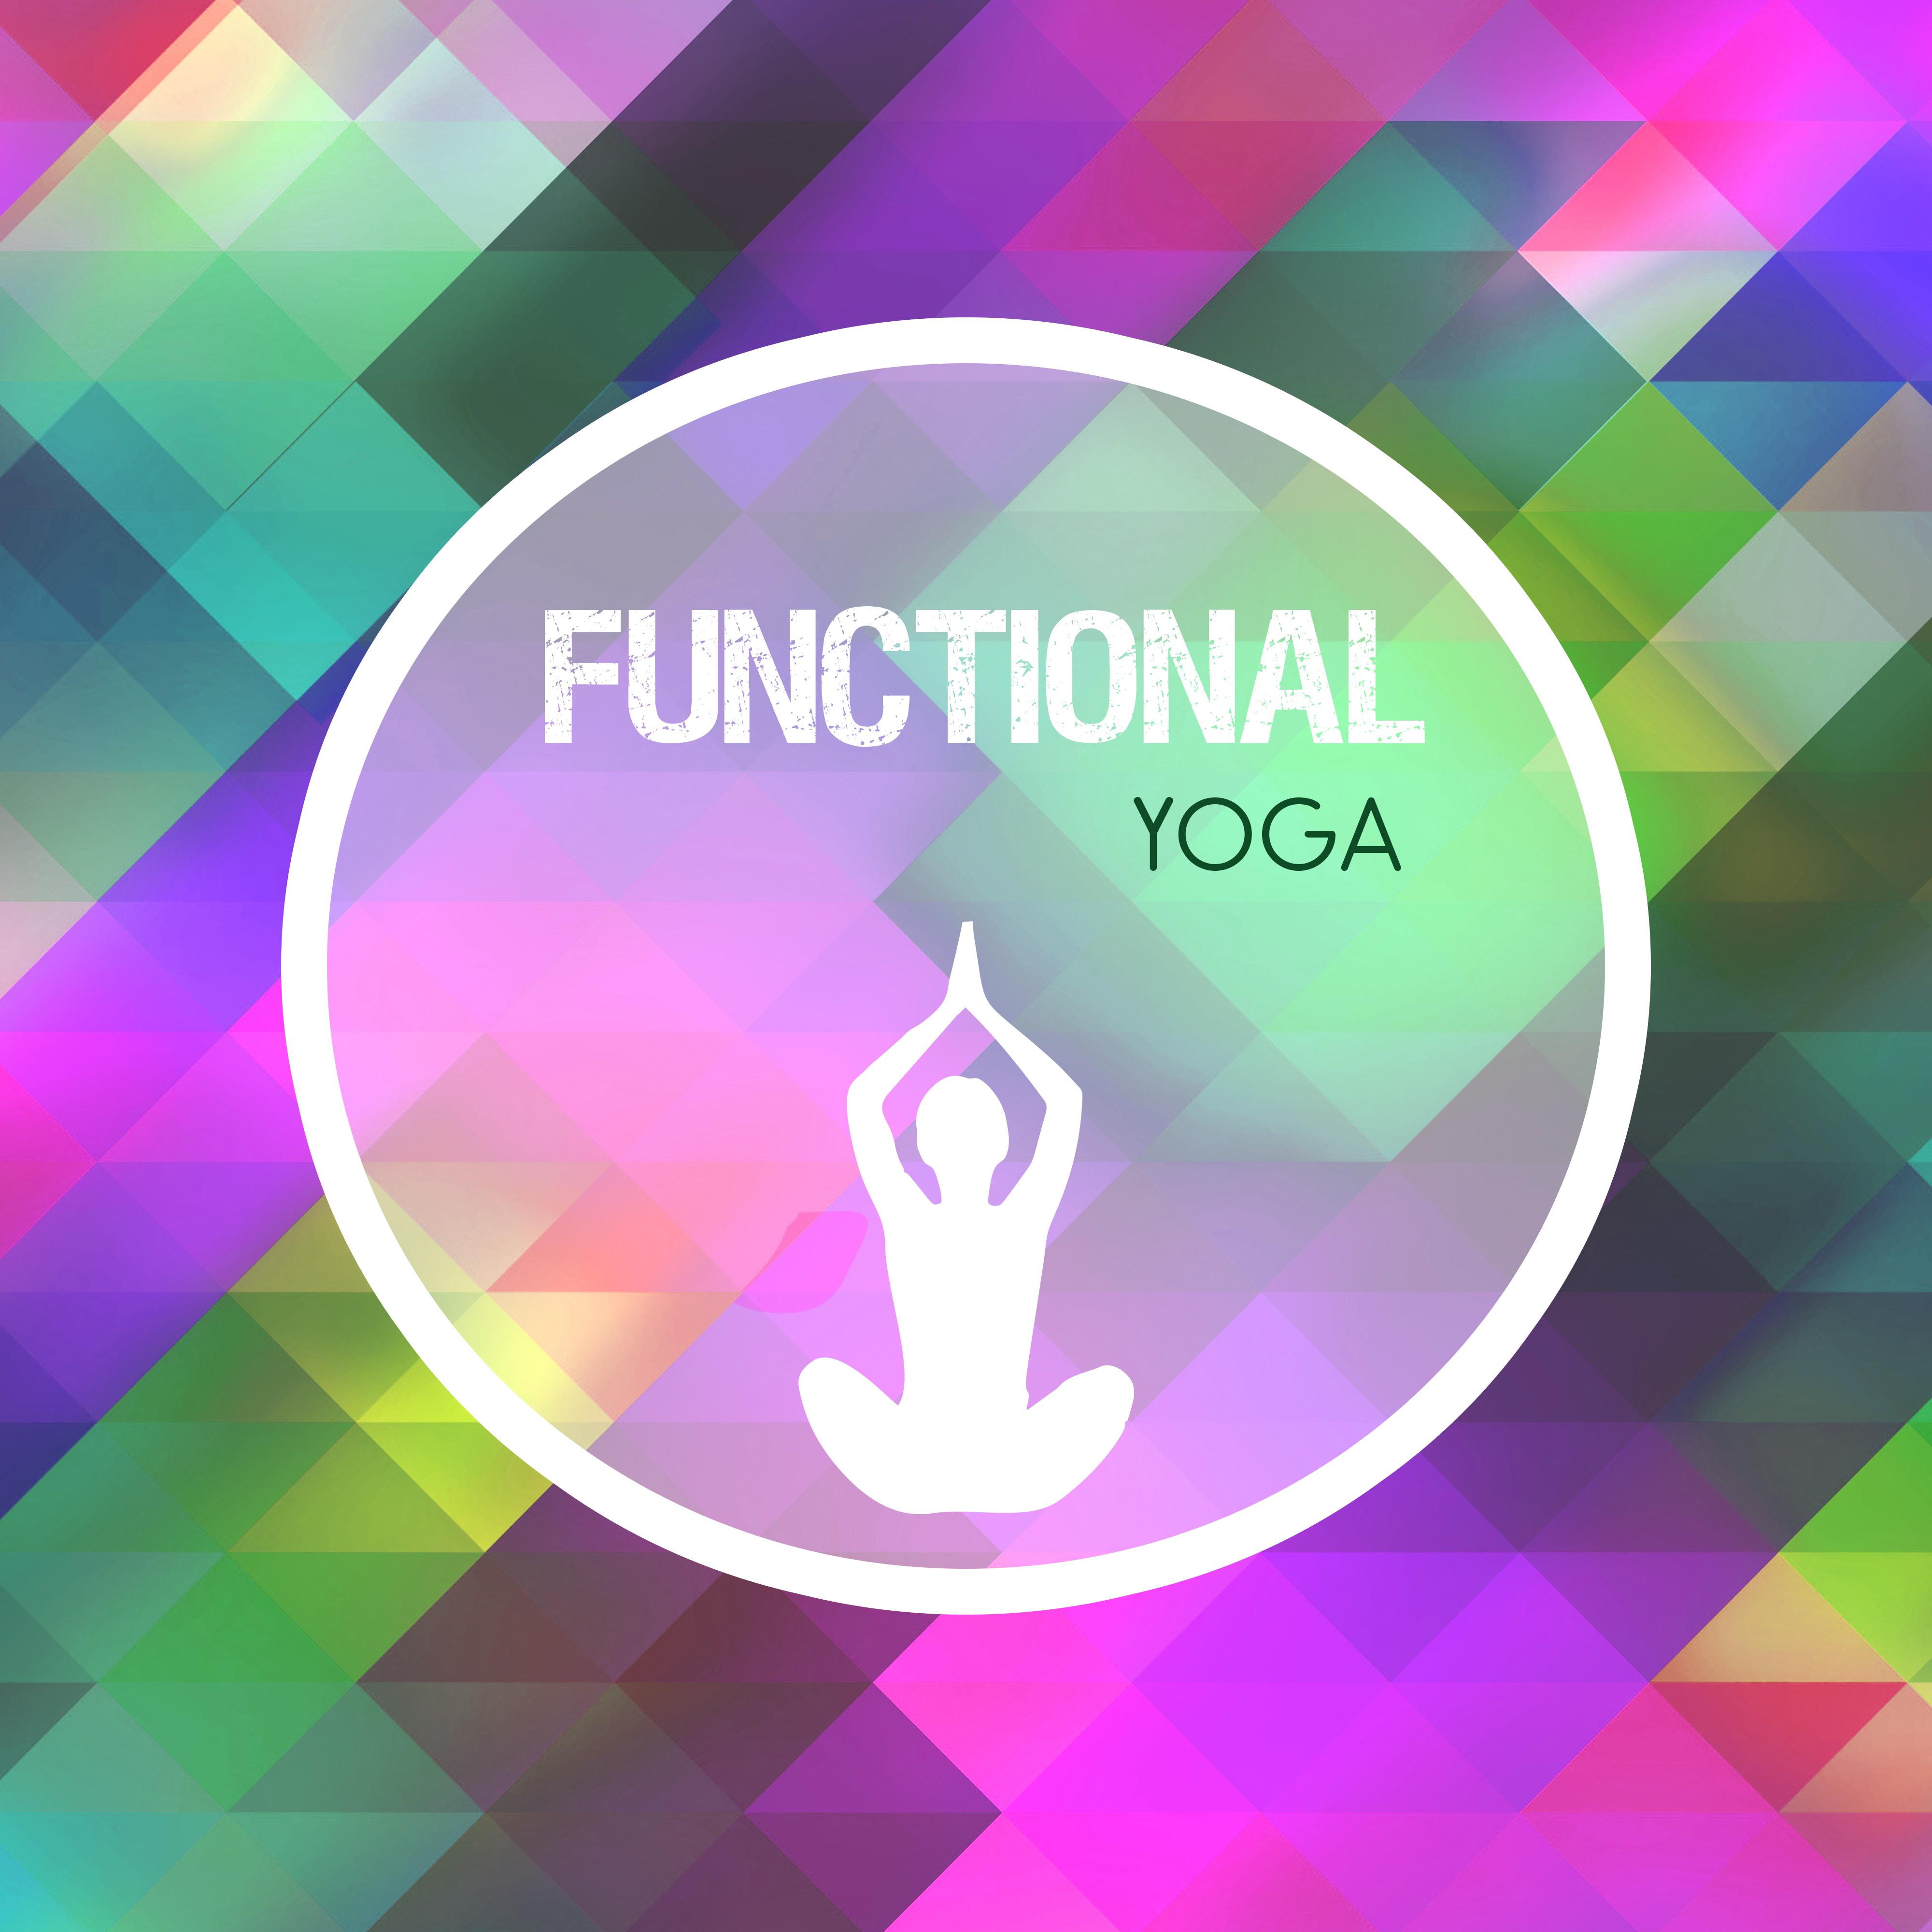 Functional Yoga – Buddhism Zen, Spiritual Sounds, Meditation Music, Healing Inner Calmness